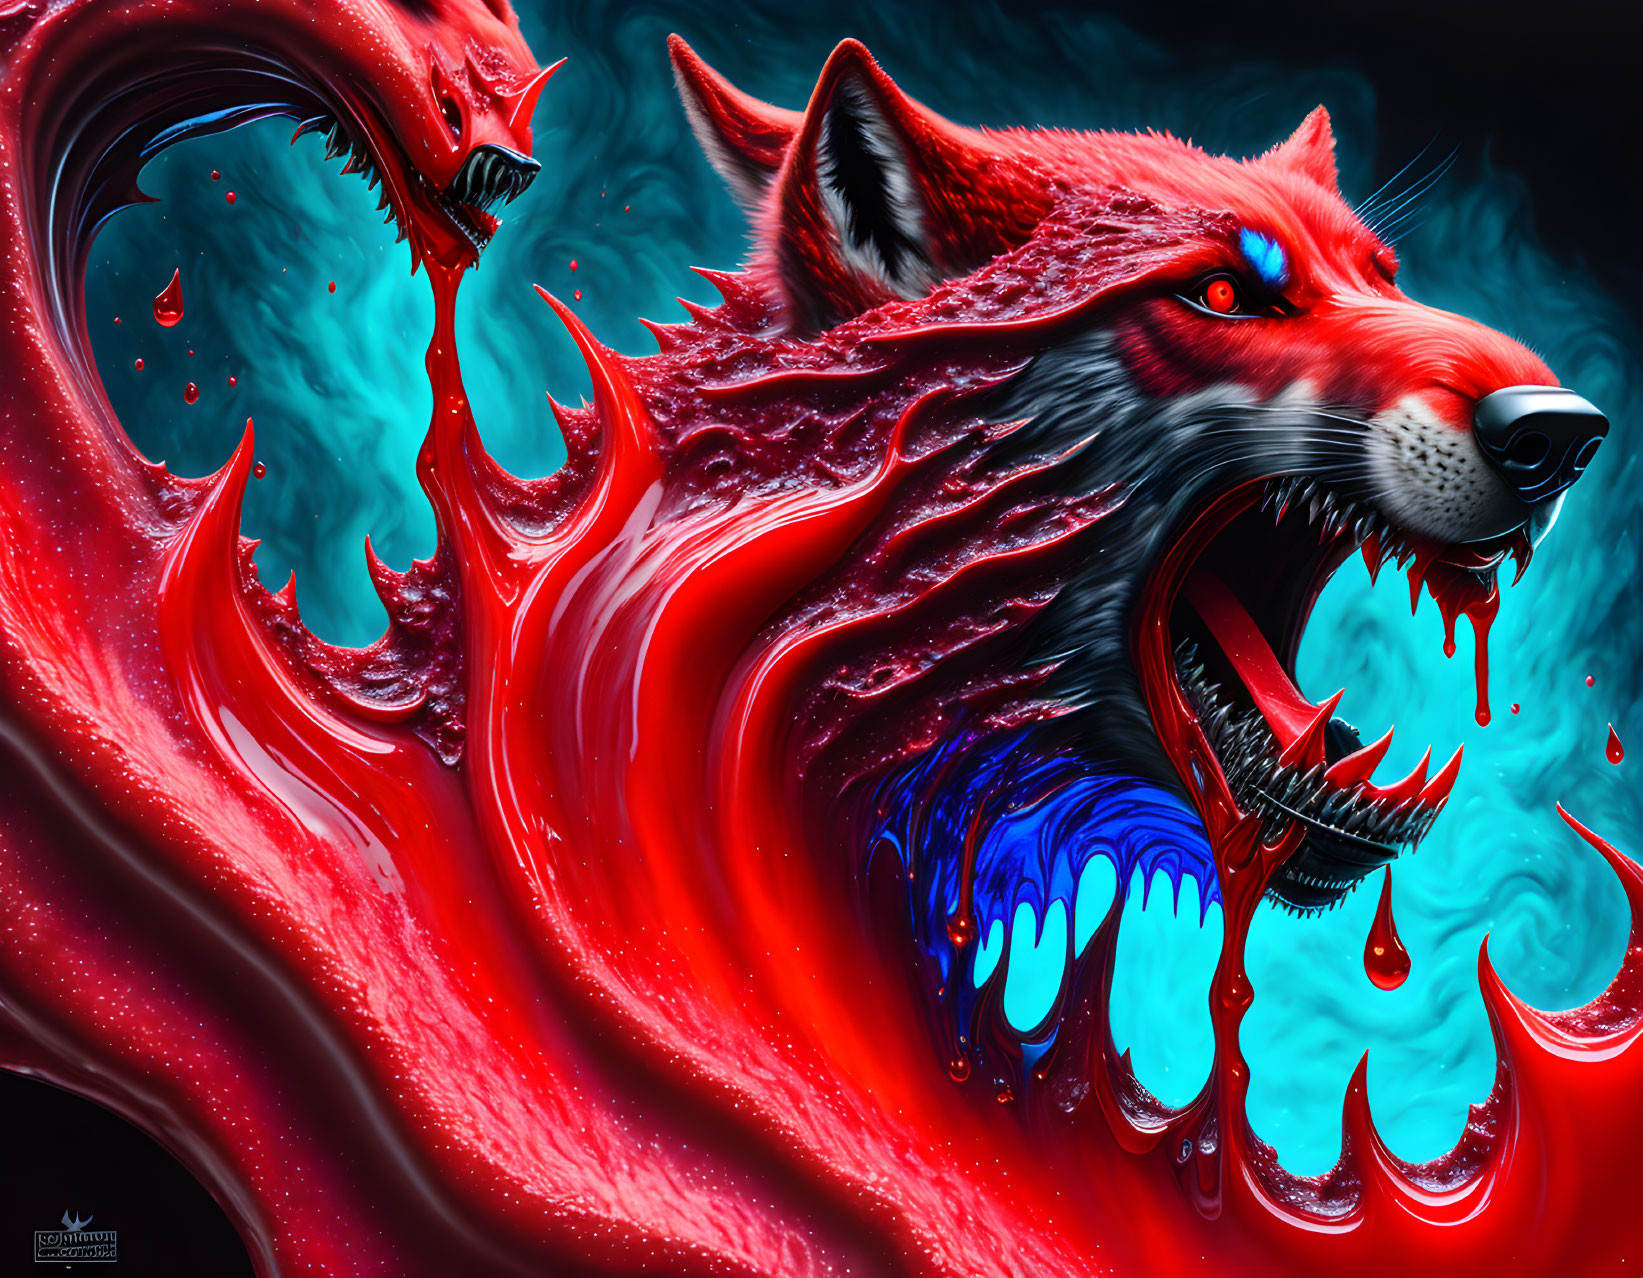 Vibrant digital artwork: Red wolf with fierce eyes in surreal liquid swirl